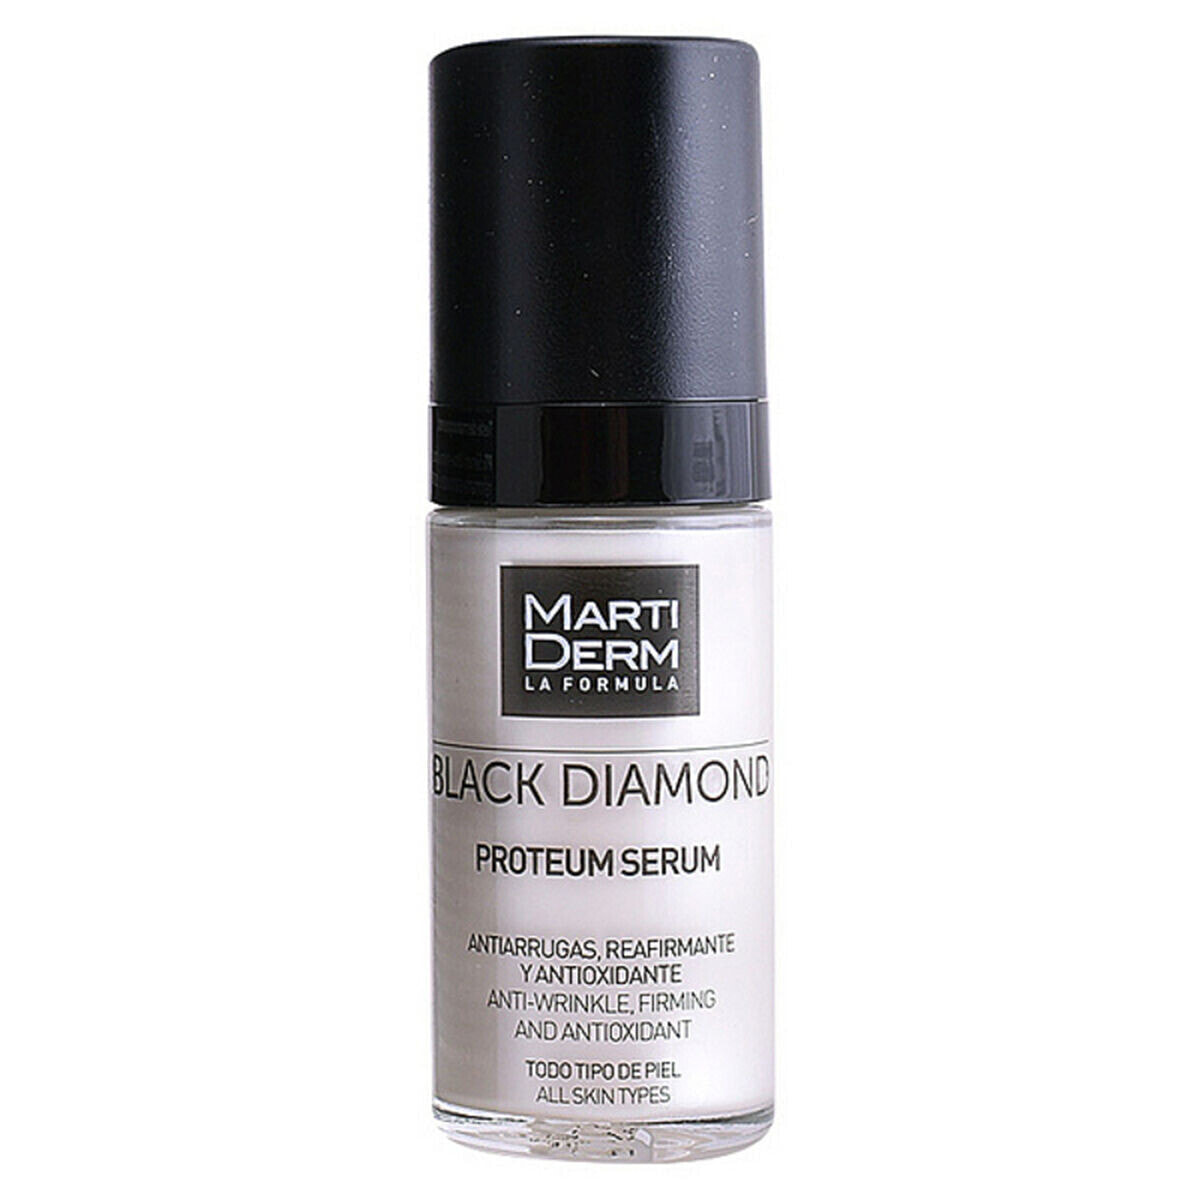 Укрепляющая сыворотка Black Diamond Martiderm 1472-42322 (30 ml) 30 ml